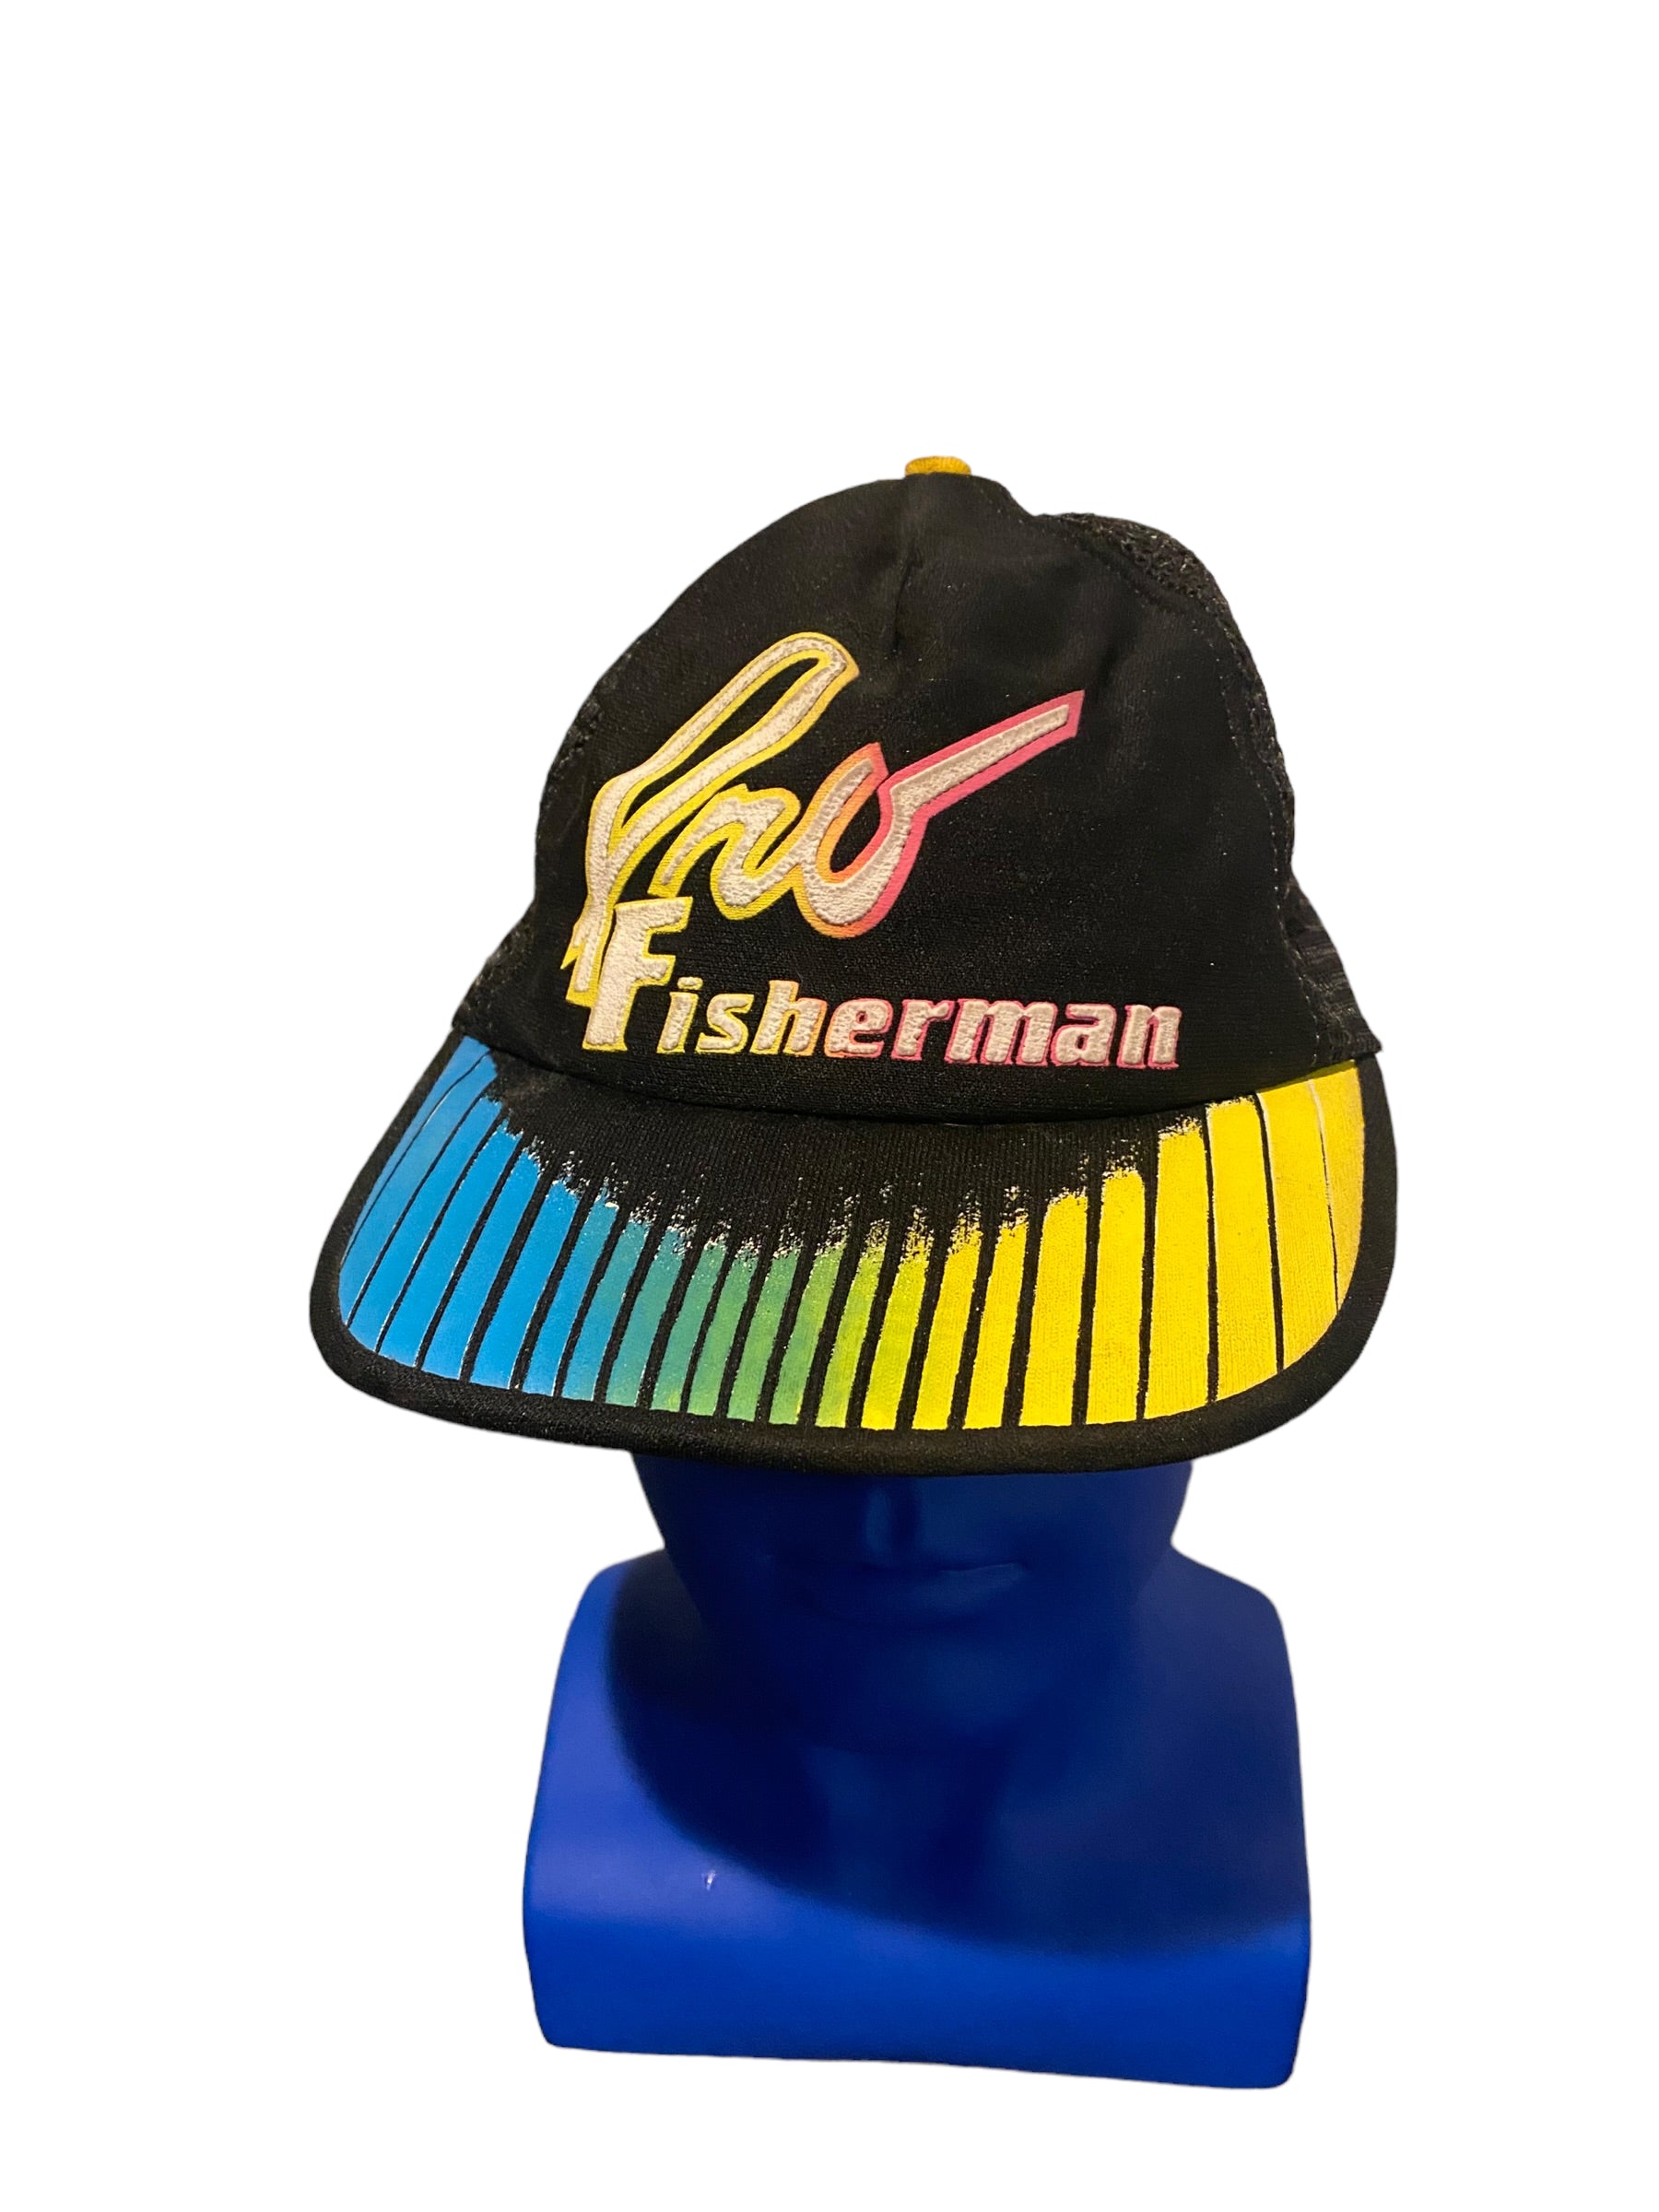 Vintage pro fisherman trucker hat snapback with long bill - Altezahan